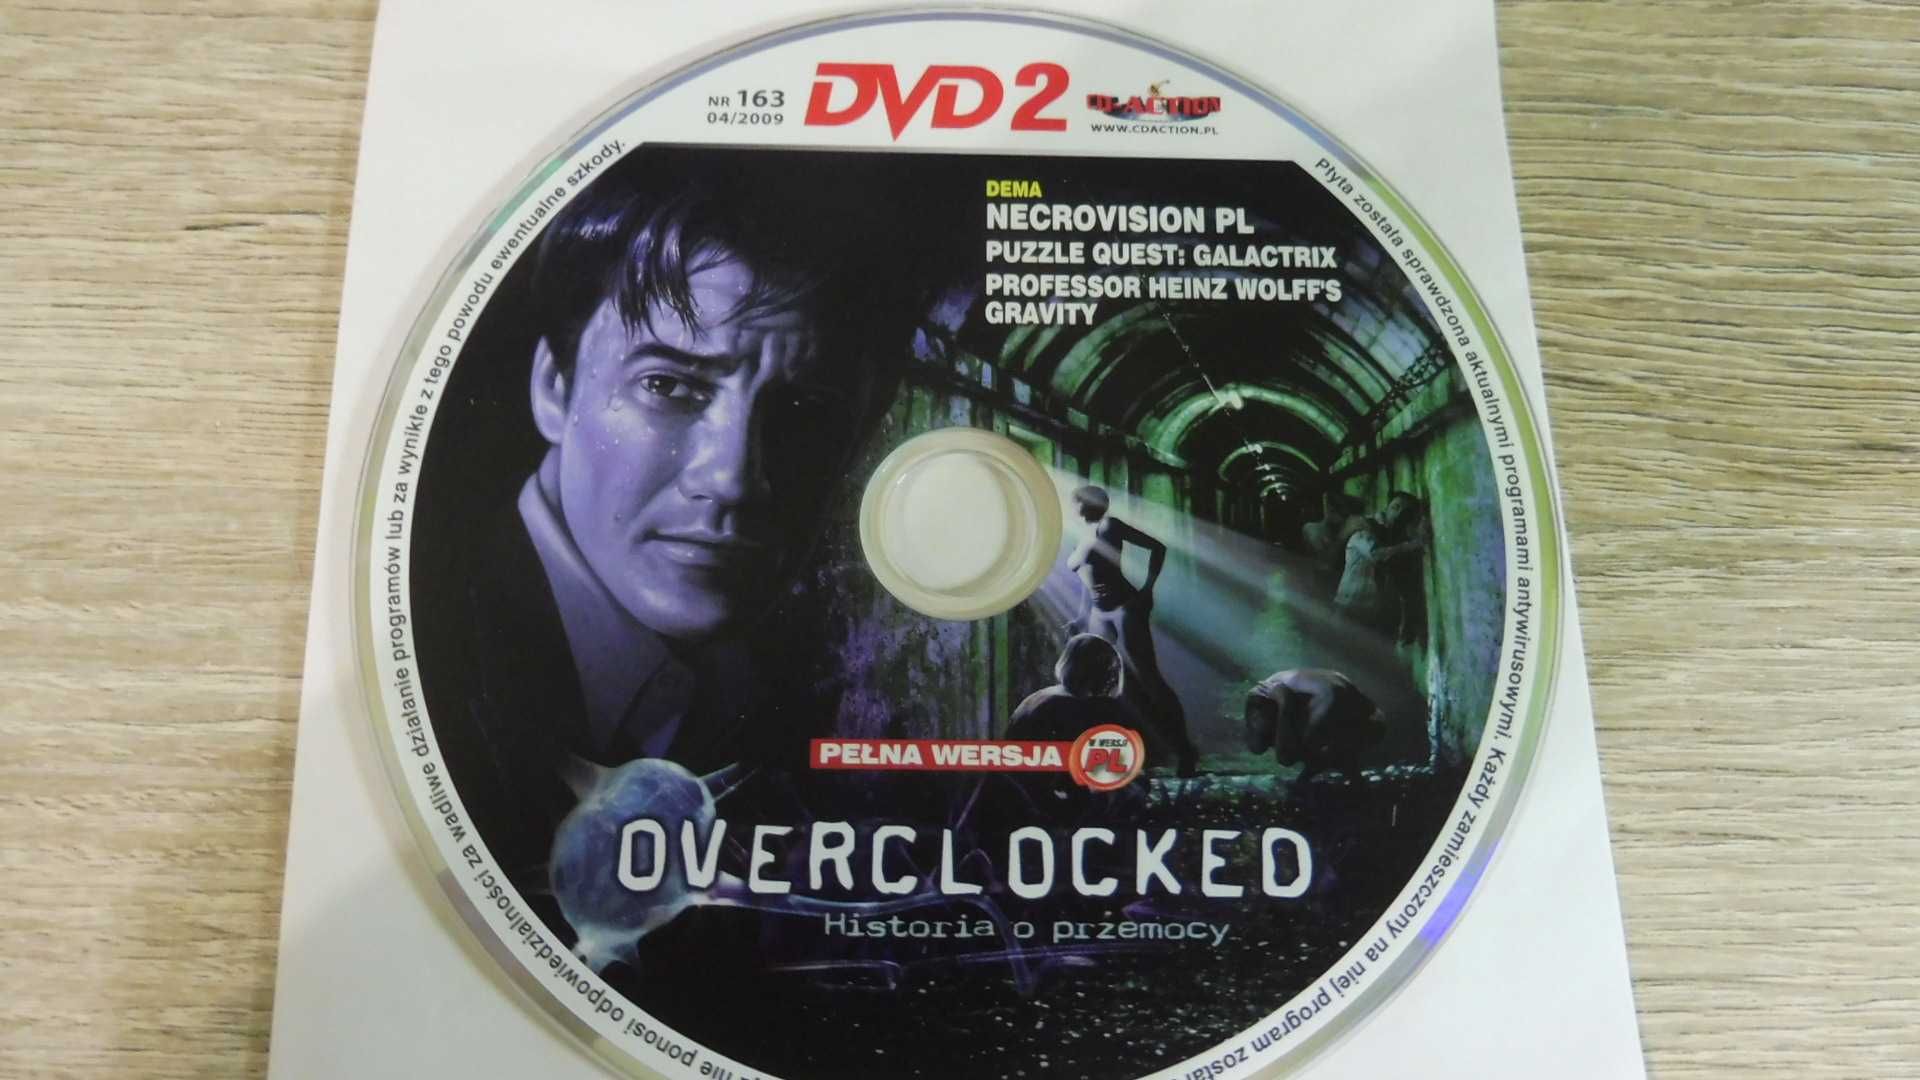 CD Action 04/2009 (163) - DVD 2 - OverLocked